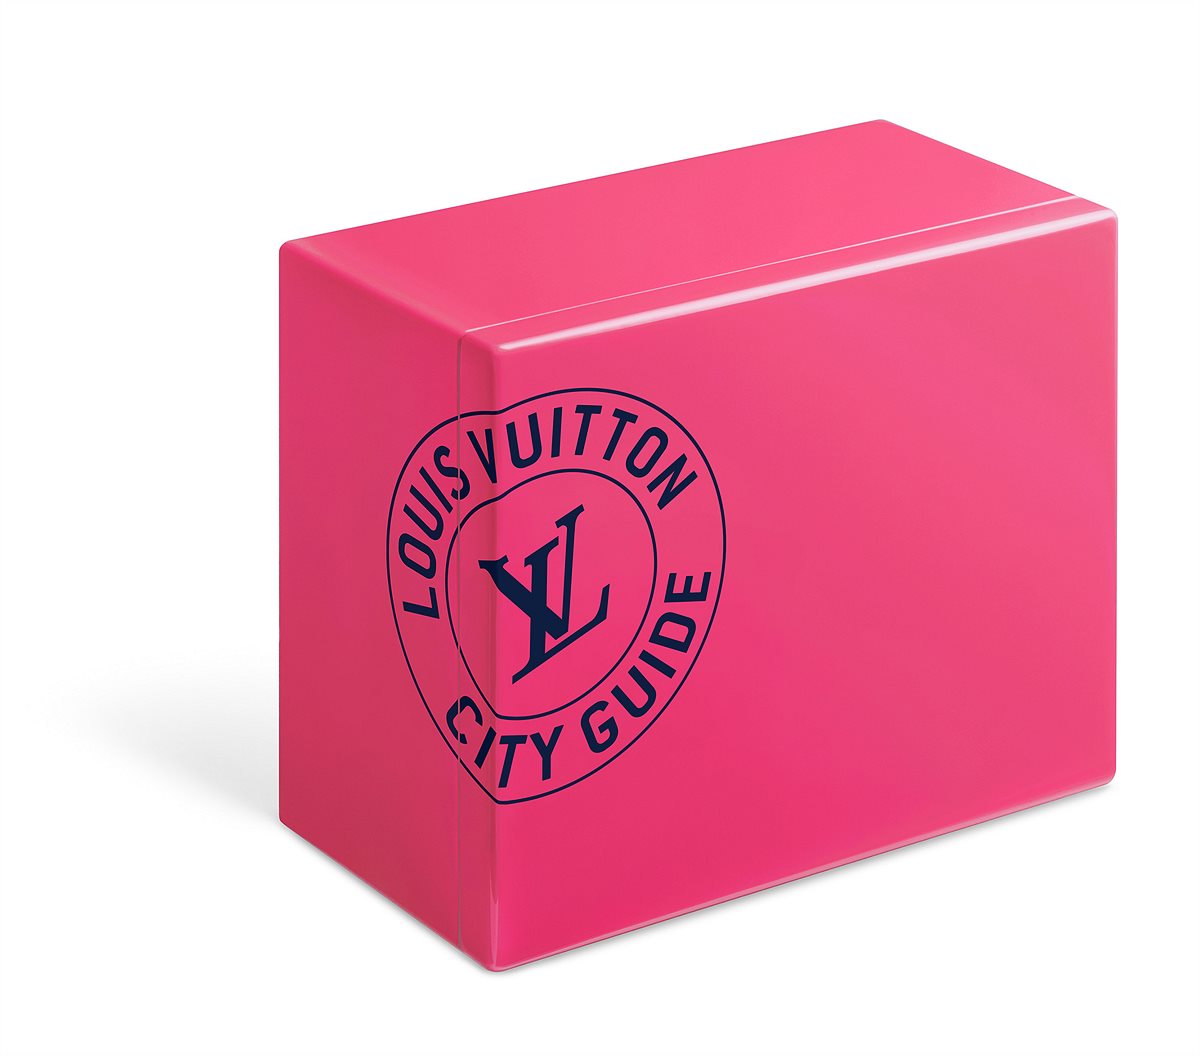 LOUIS VUITTON_City Guide Box Set_EUR 600_Taipei Pink